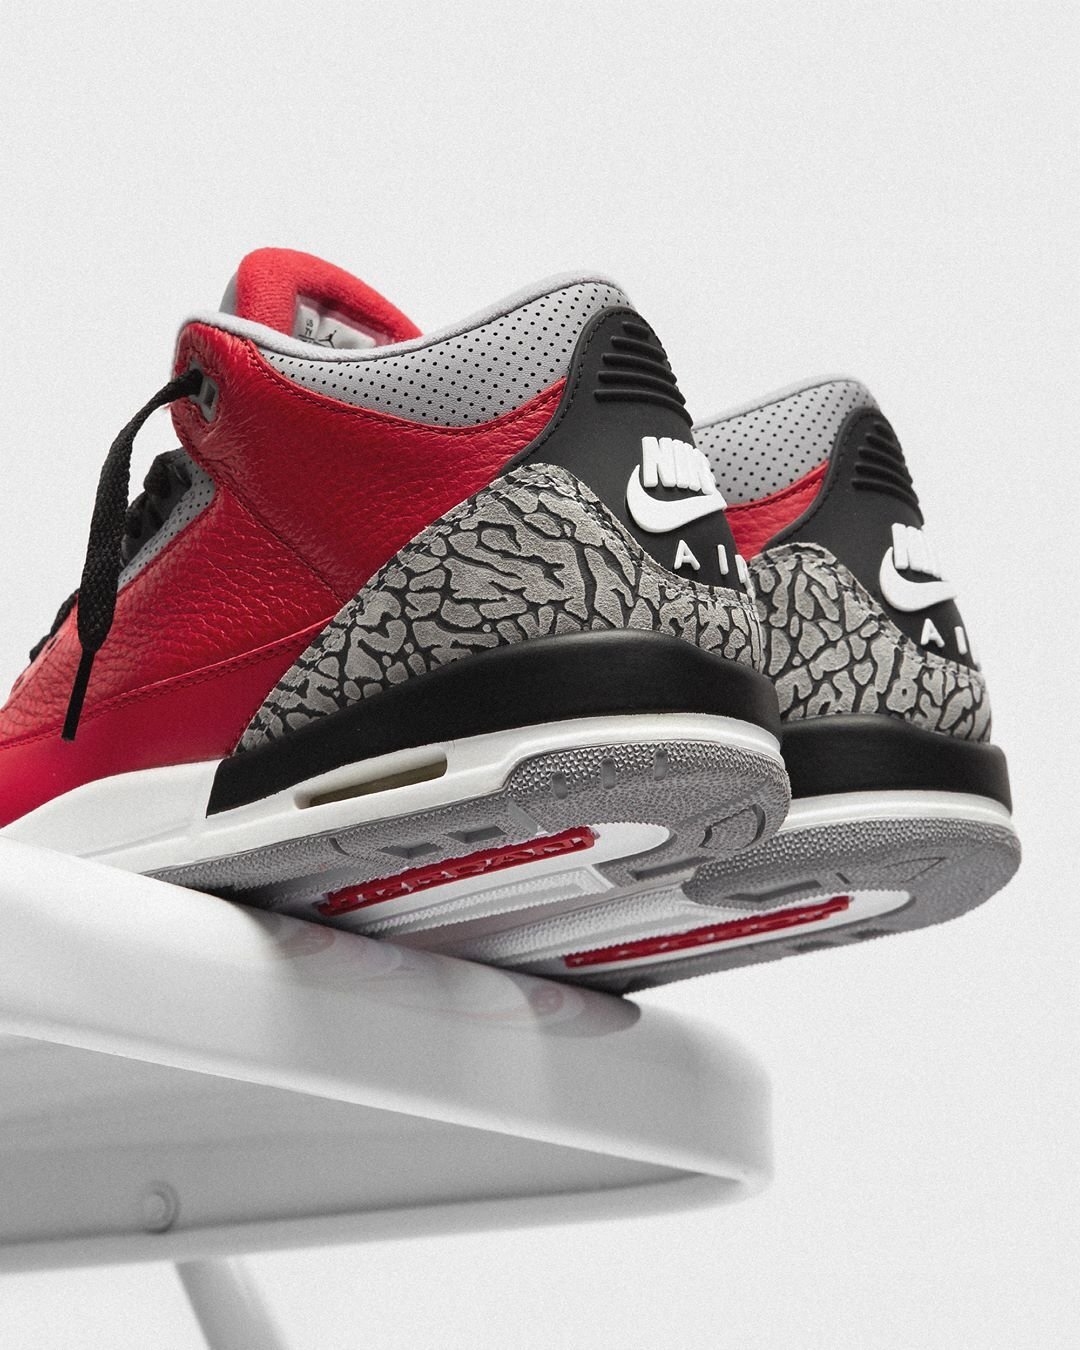 On Sale Air Jordan 3 Retro Red Cement Sneaker Shouts